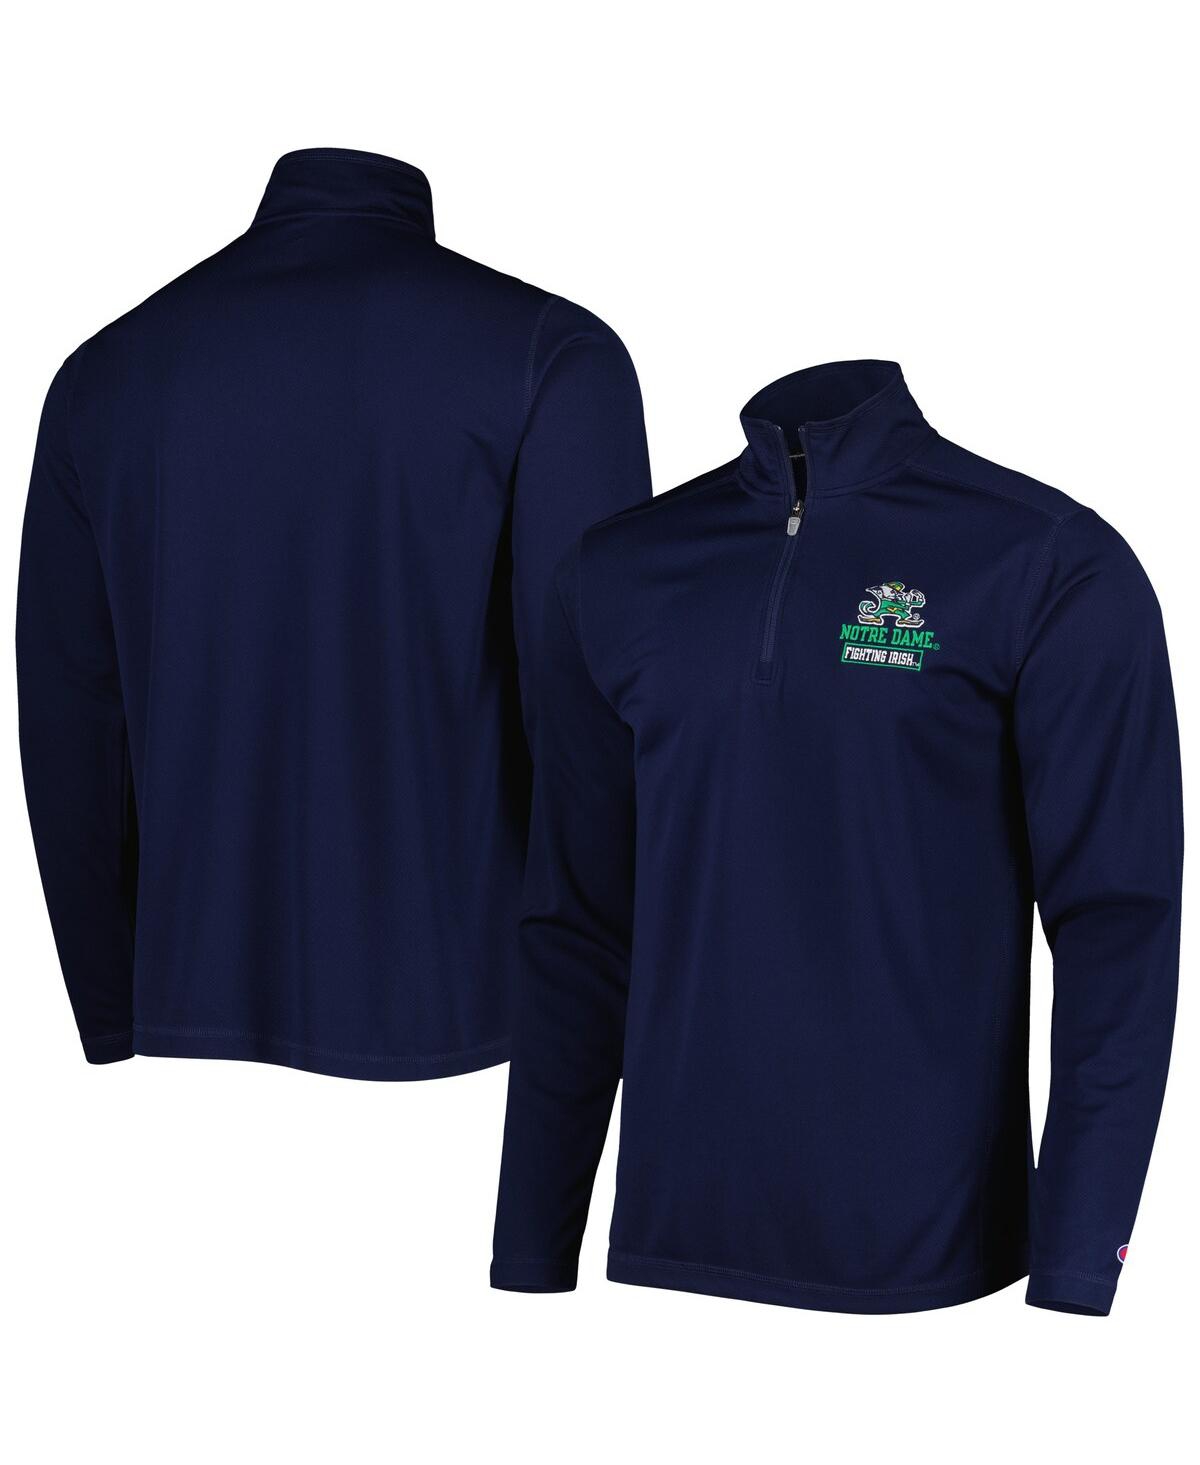 Champion Men's  Navy Notre Dame Fighting Irish Textured Quarter-zip Jacket